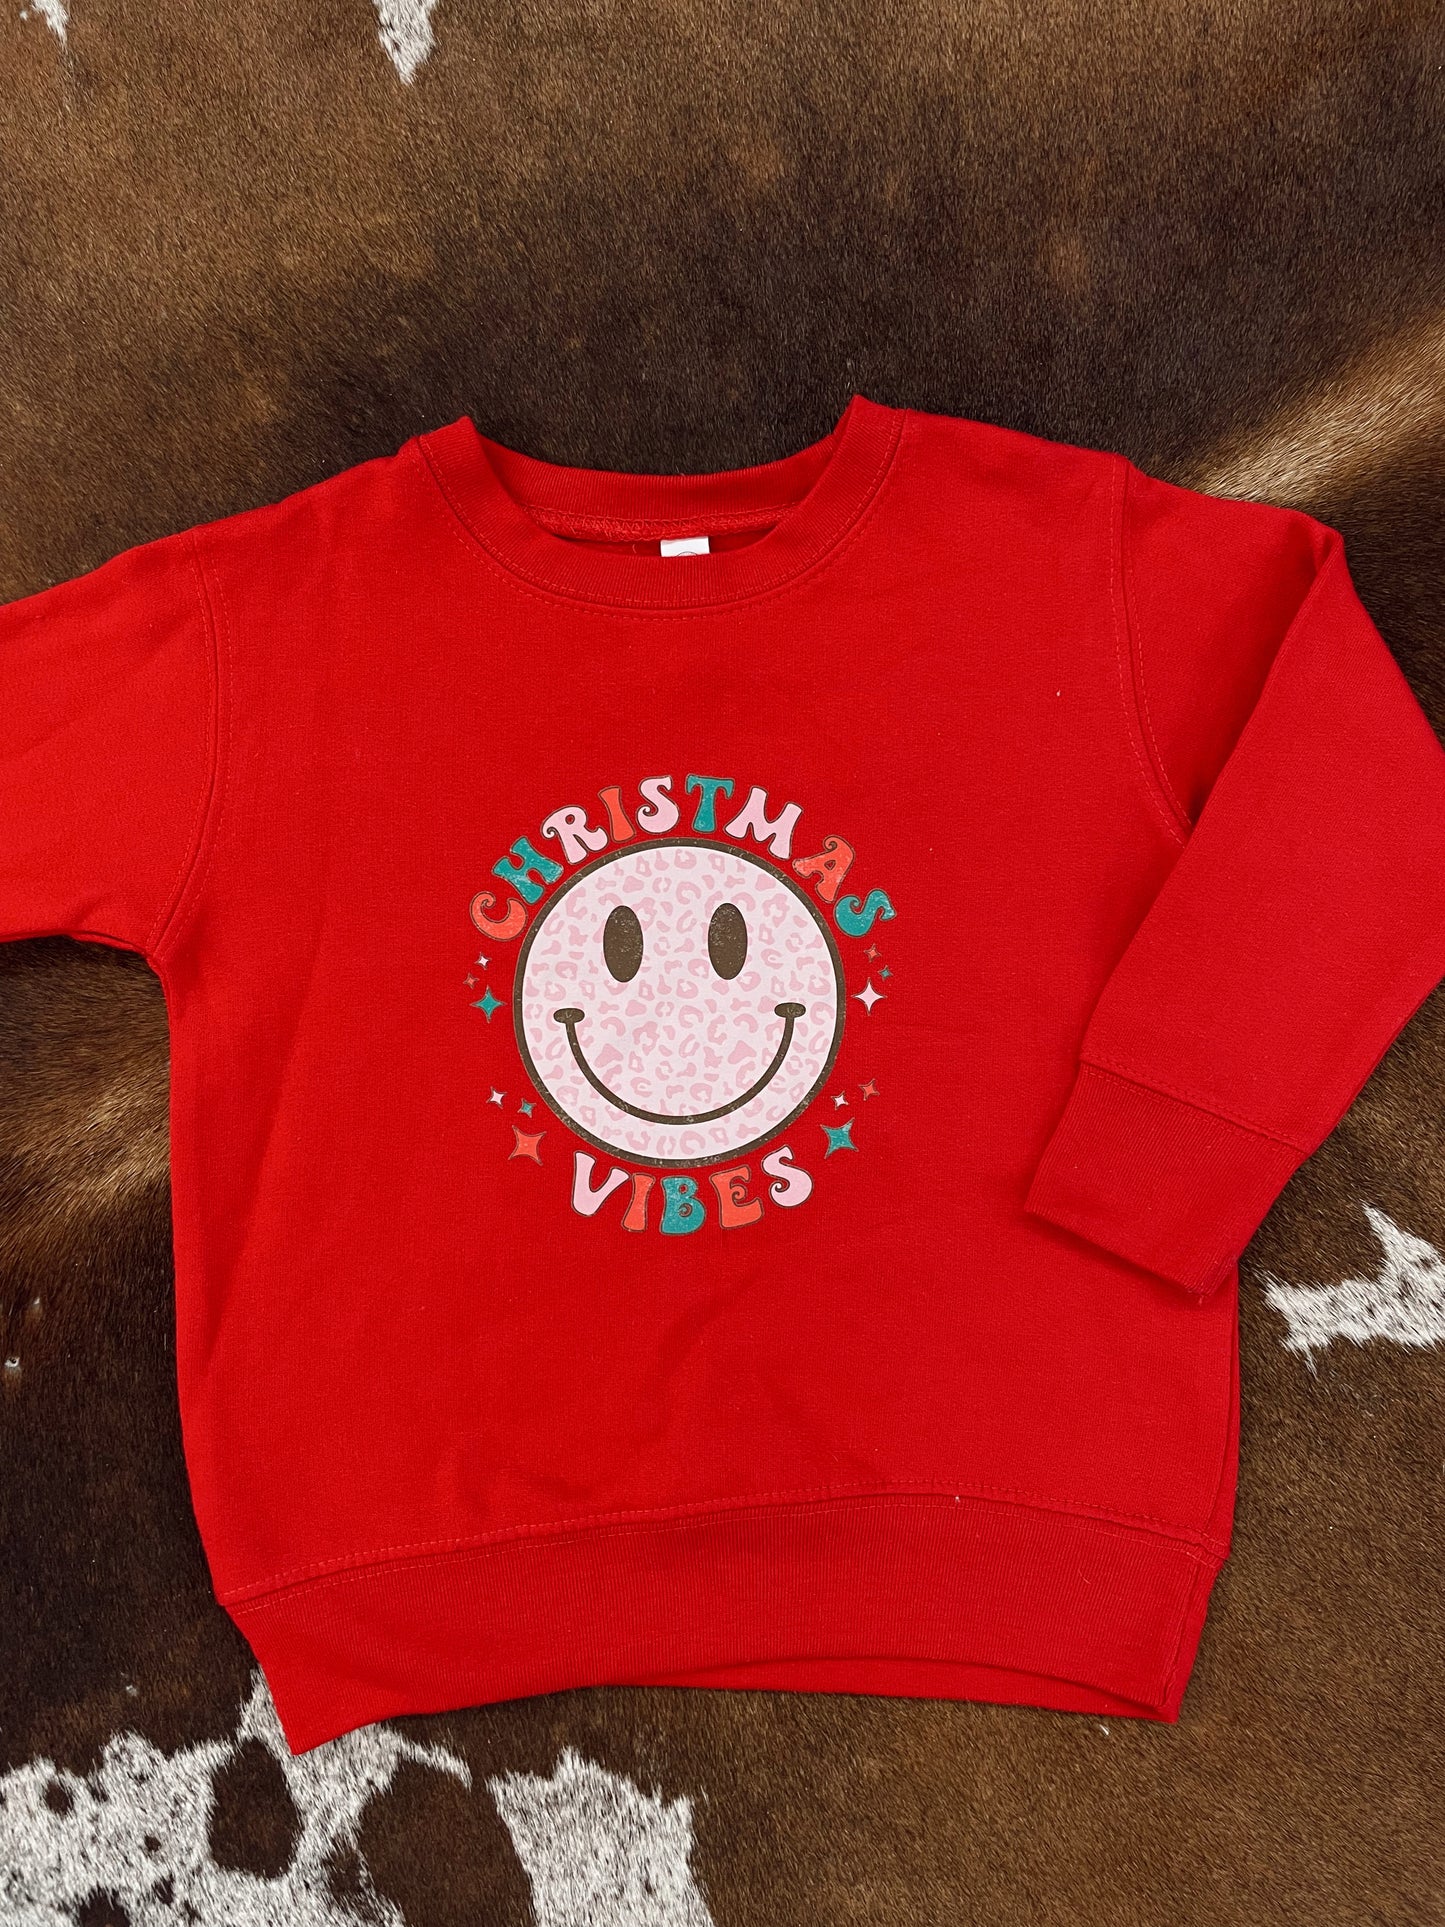 The Christmas Vibes Graphic Sweatshirt